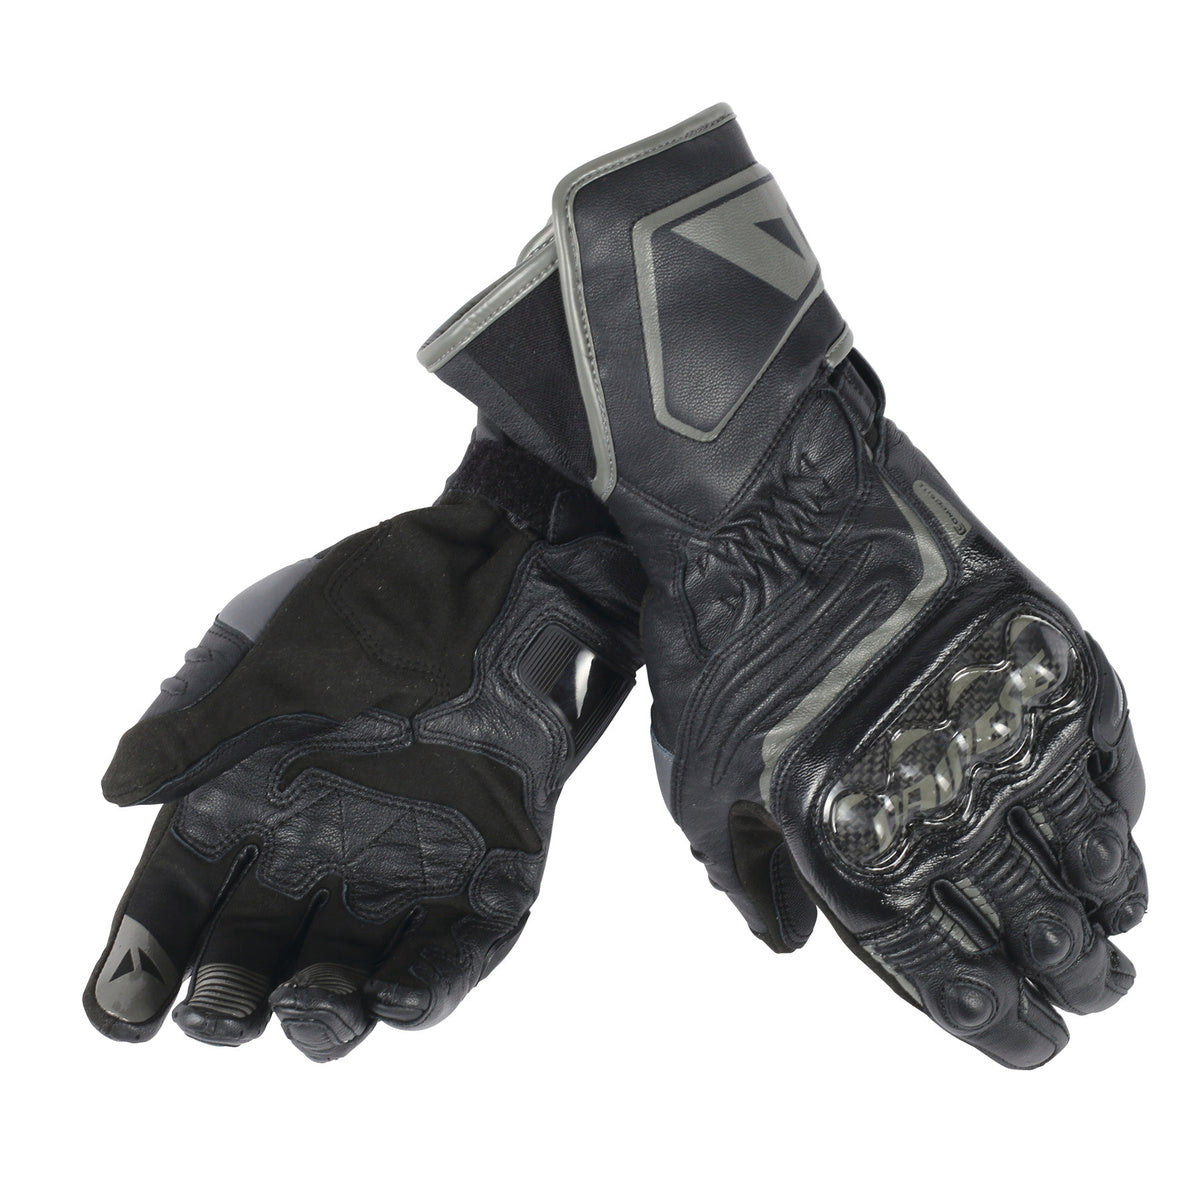 Dainese Carbon D1 Long Gloves